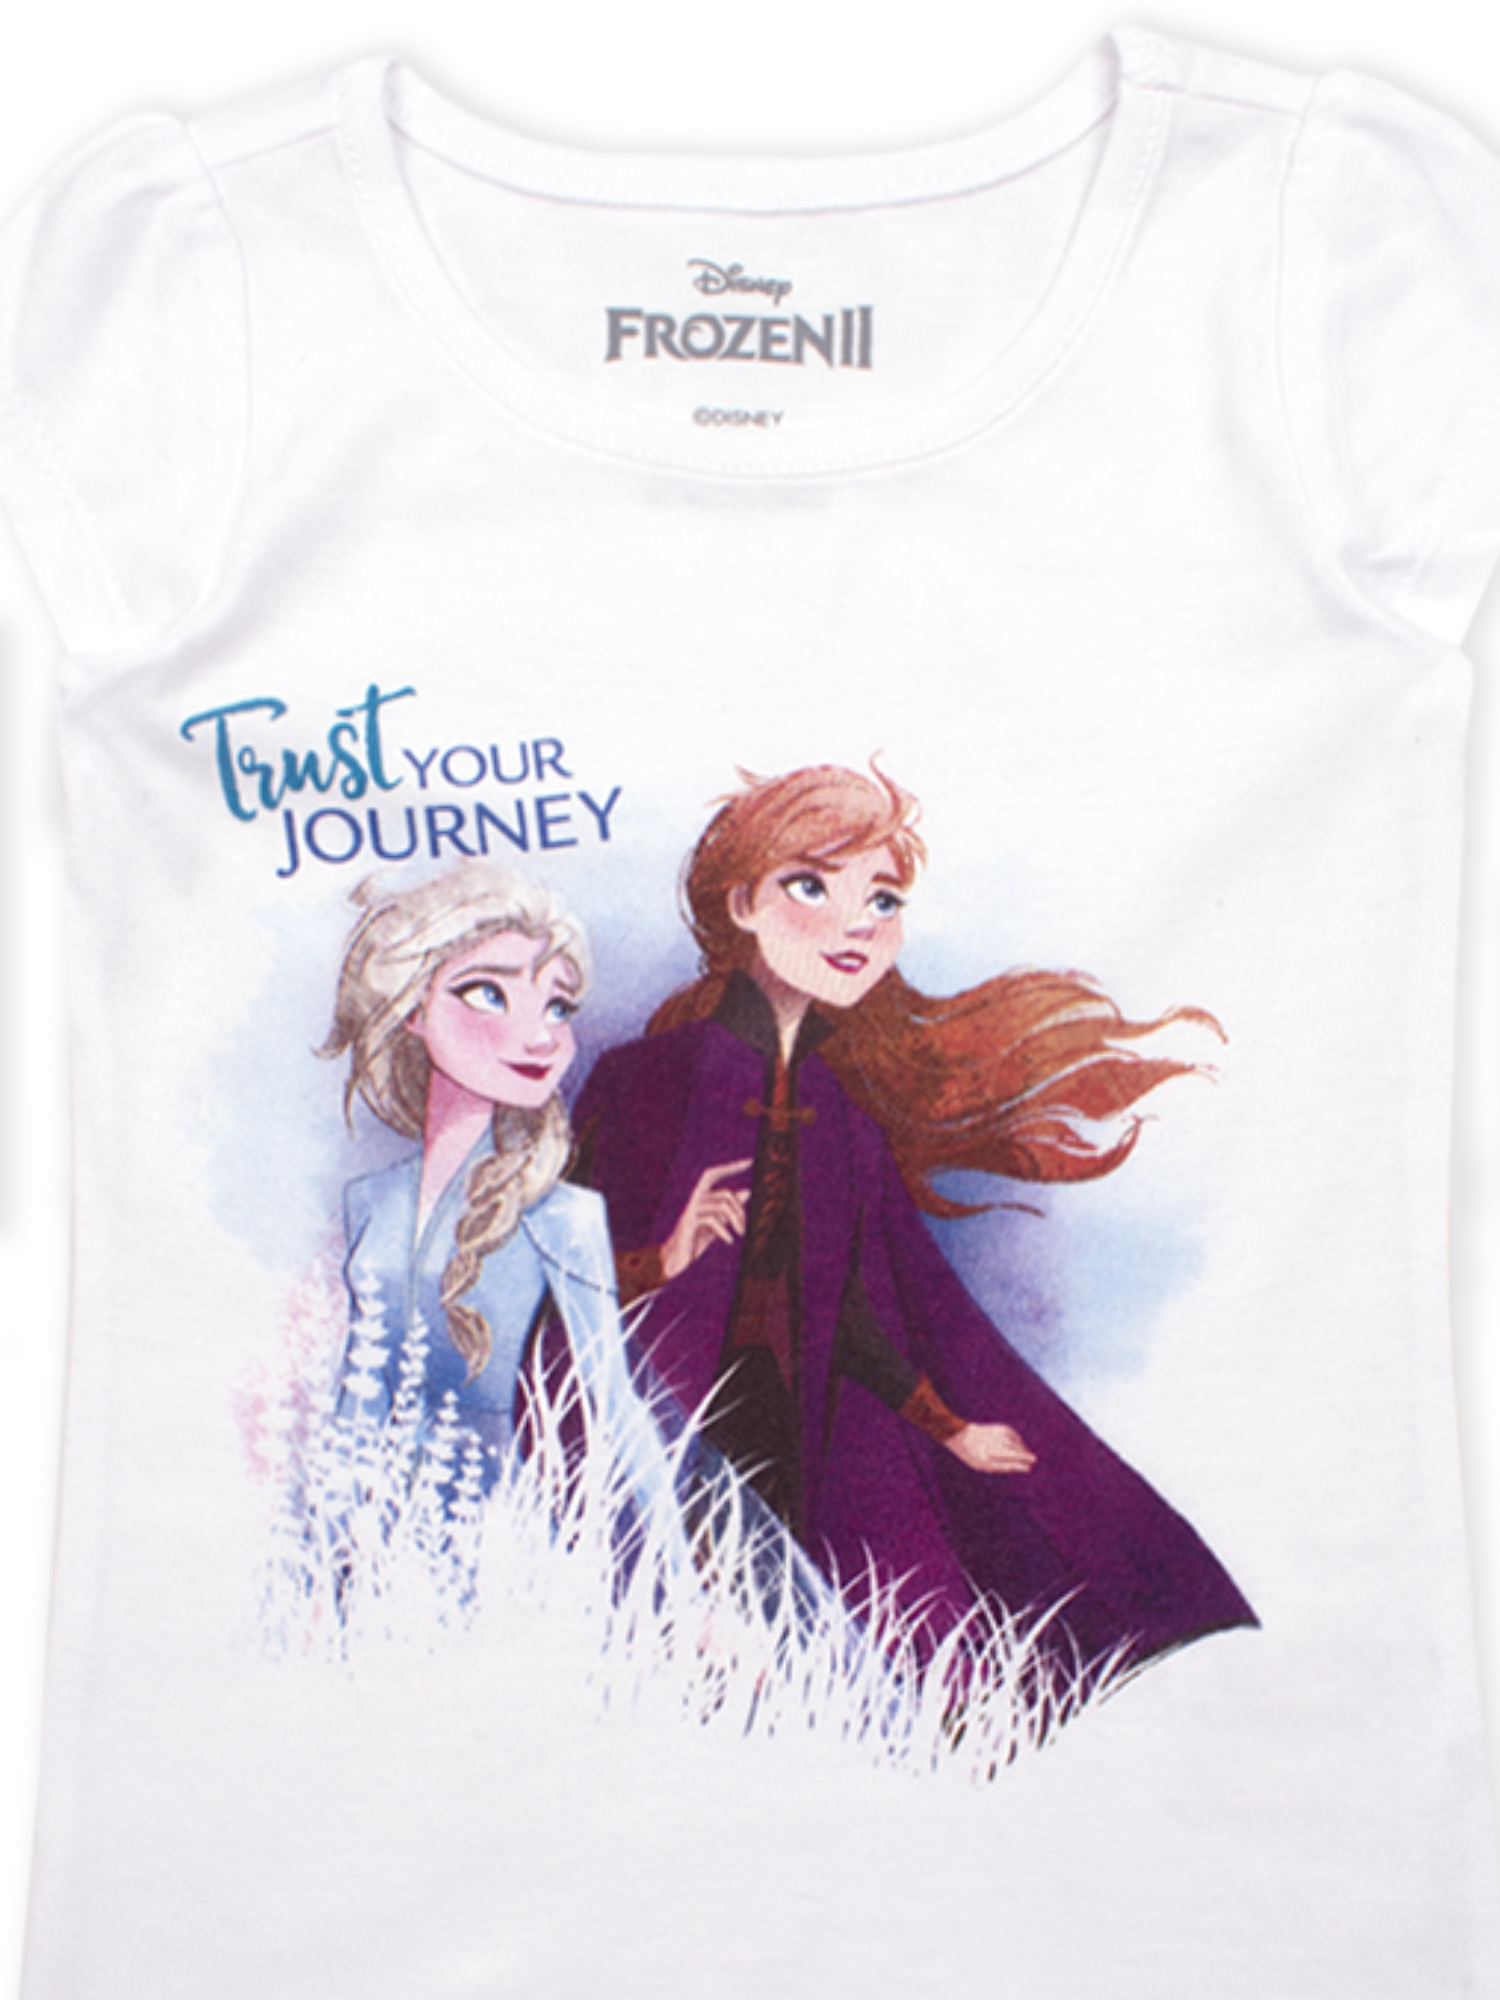 Disney Frozen 2 Anna Elsa Toddler Girl Hoodie, T-shirt, Leggings & Hairties, 4pc Outfit Set - image 2 of 2